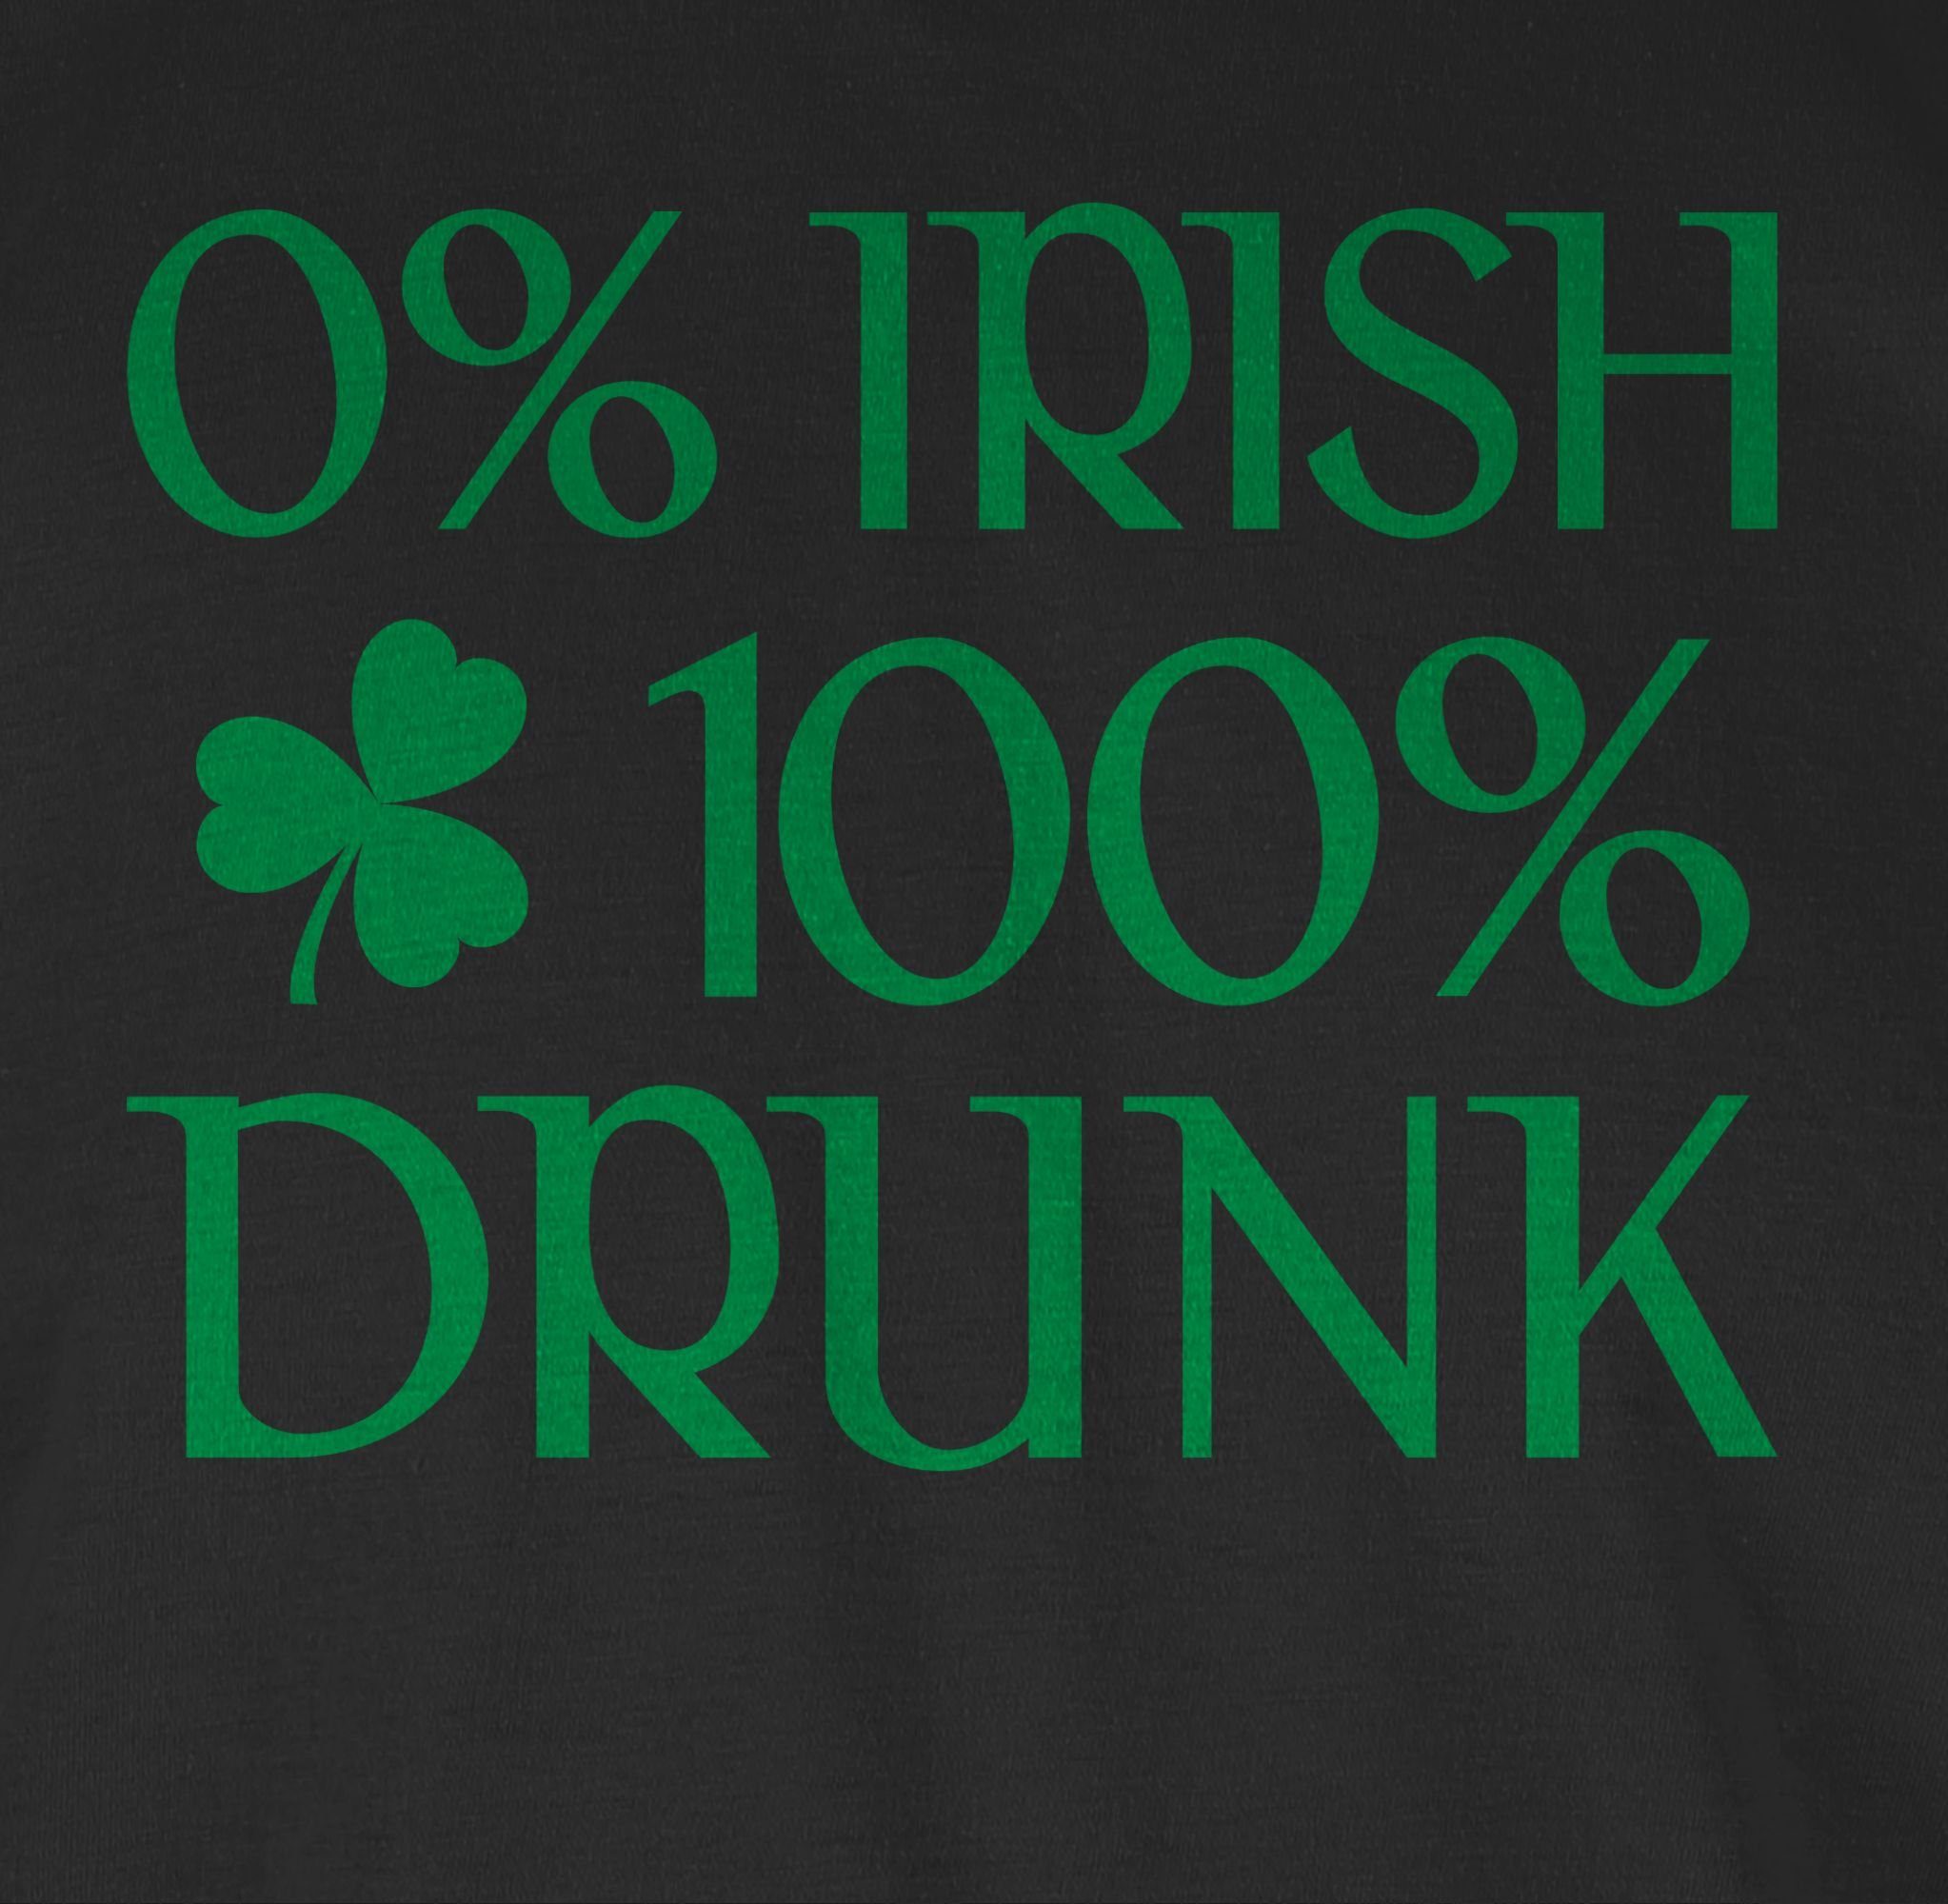 Day Irish Patricks Patricks Shirtracer Day Drunk Schwarz St 0% St. T-Shirt 100% 1